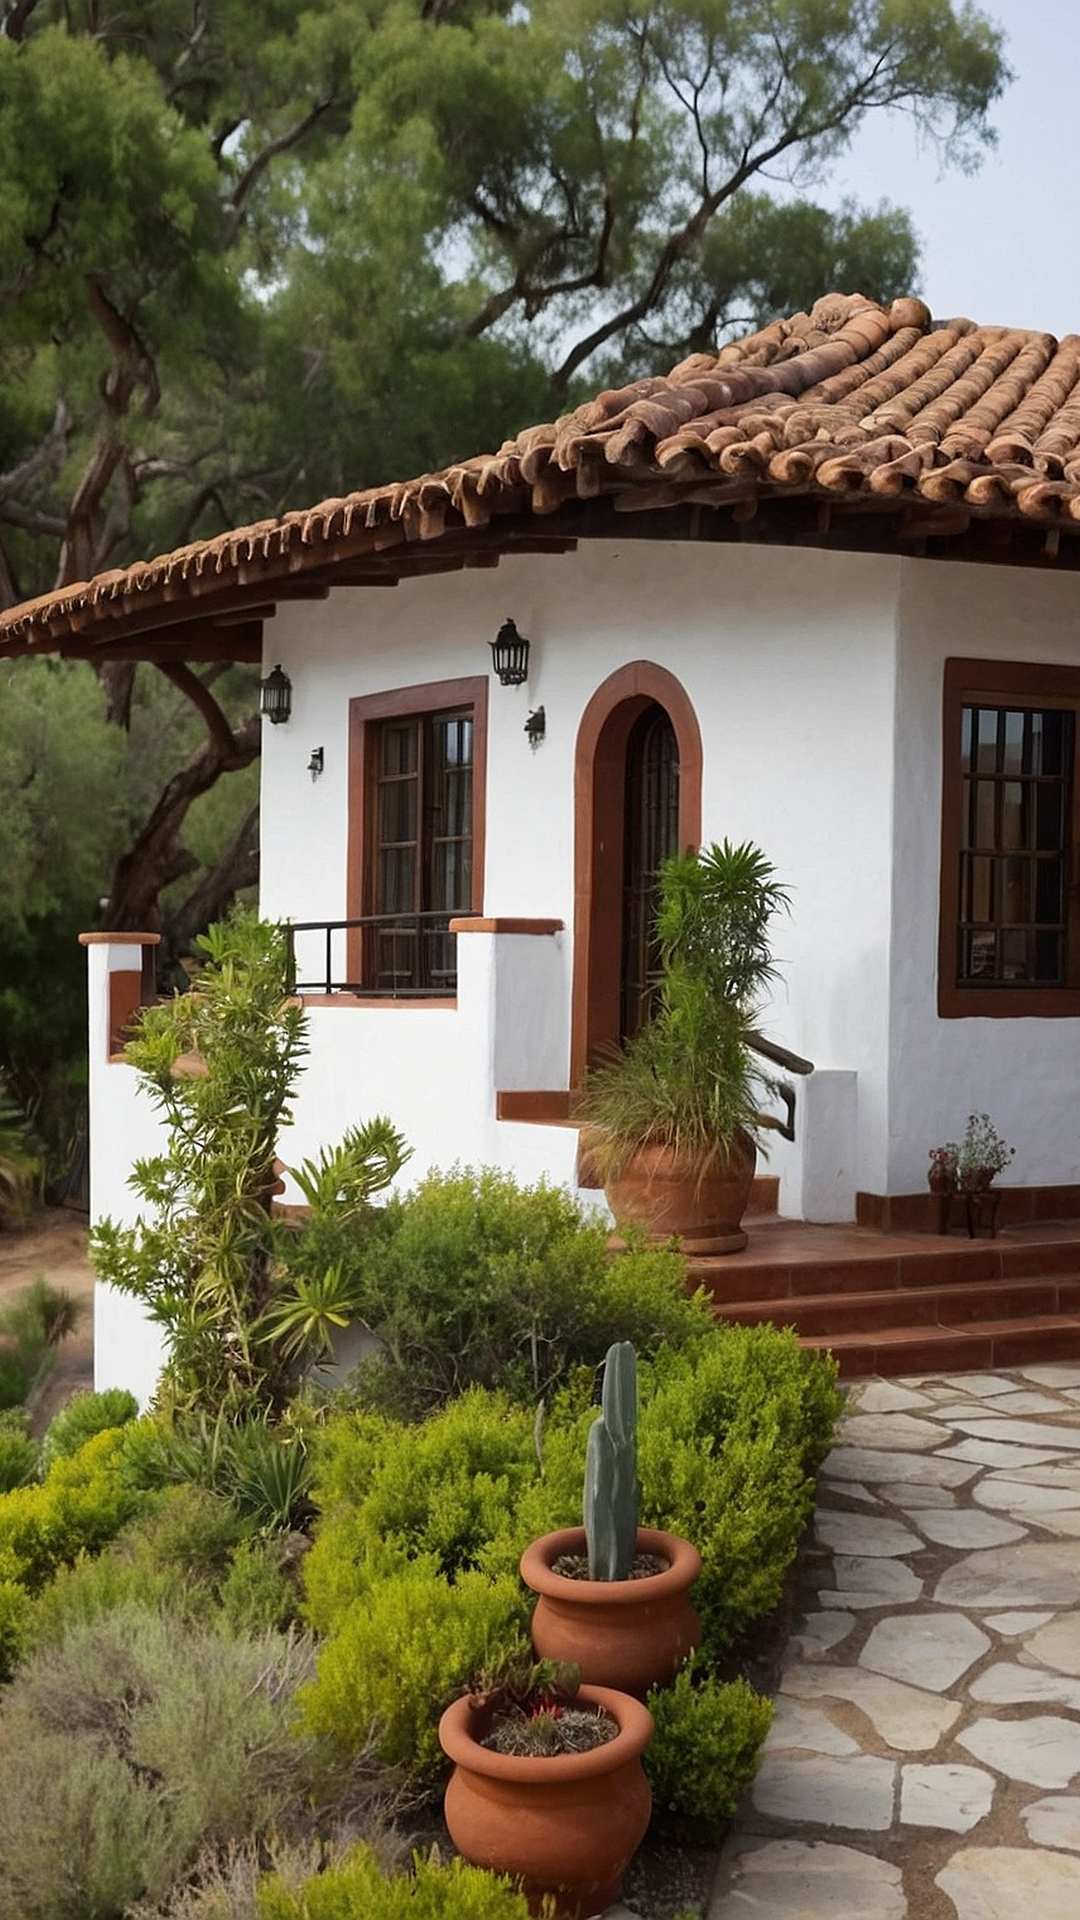 Authentic Spanish Flair: Hacienda Houses